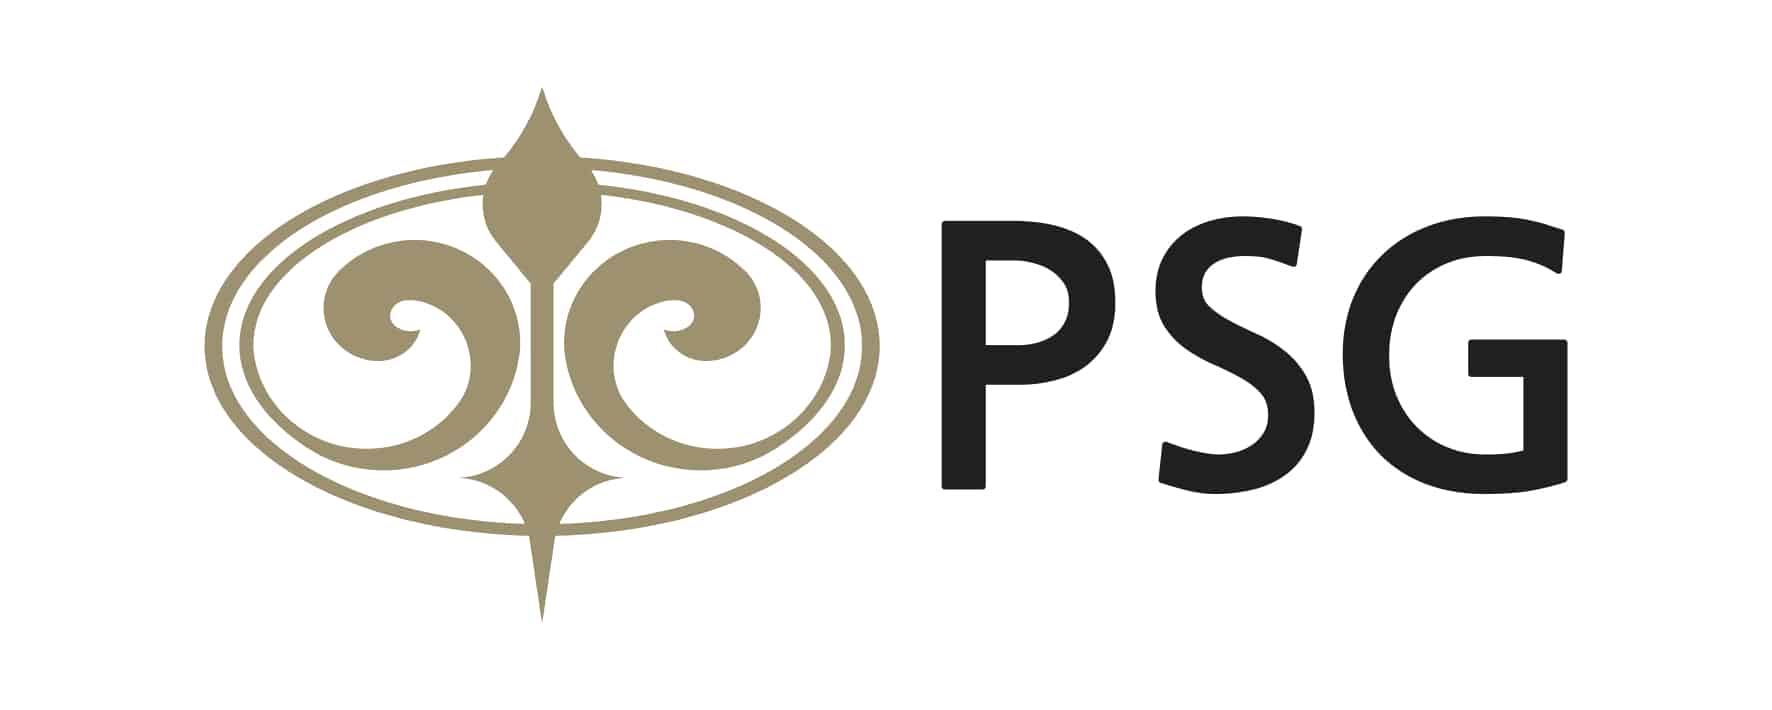 PSG Financial Services Brand Logo